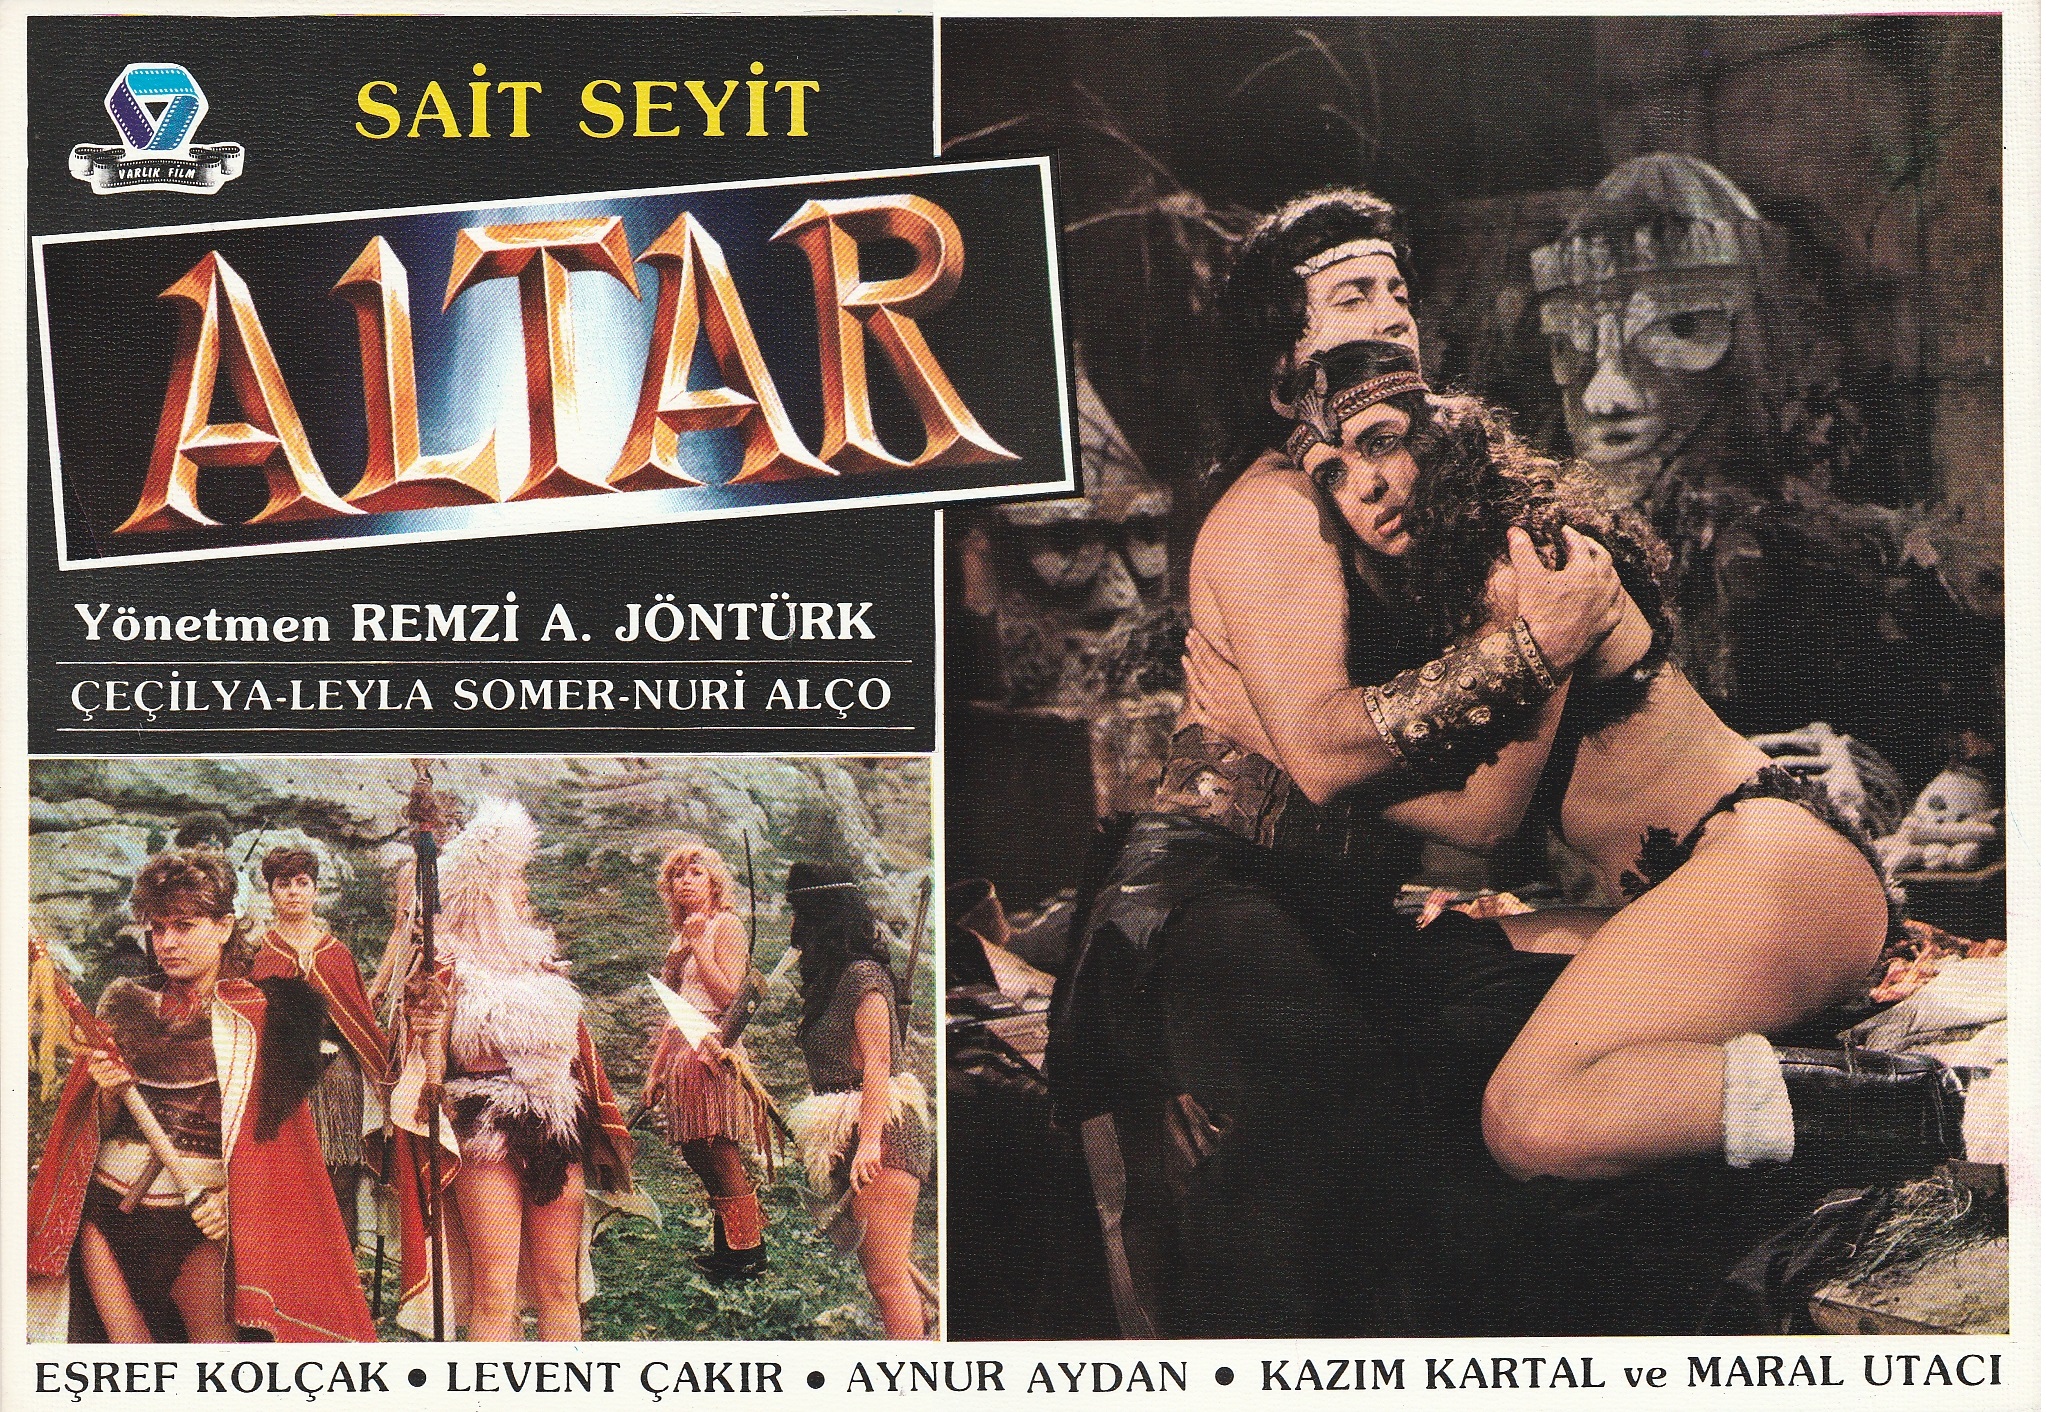 Altar (1985) Screenshot 3 